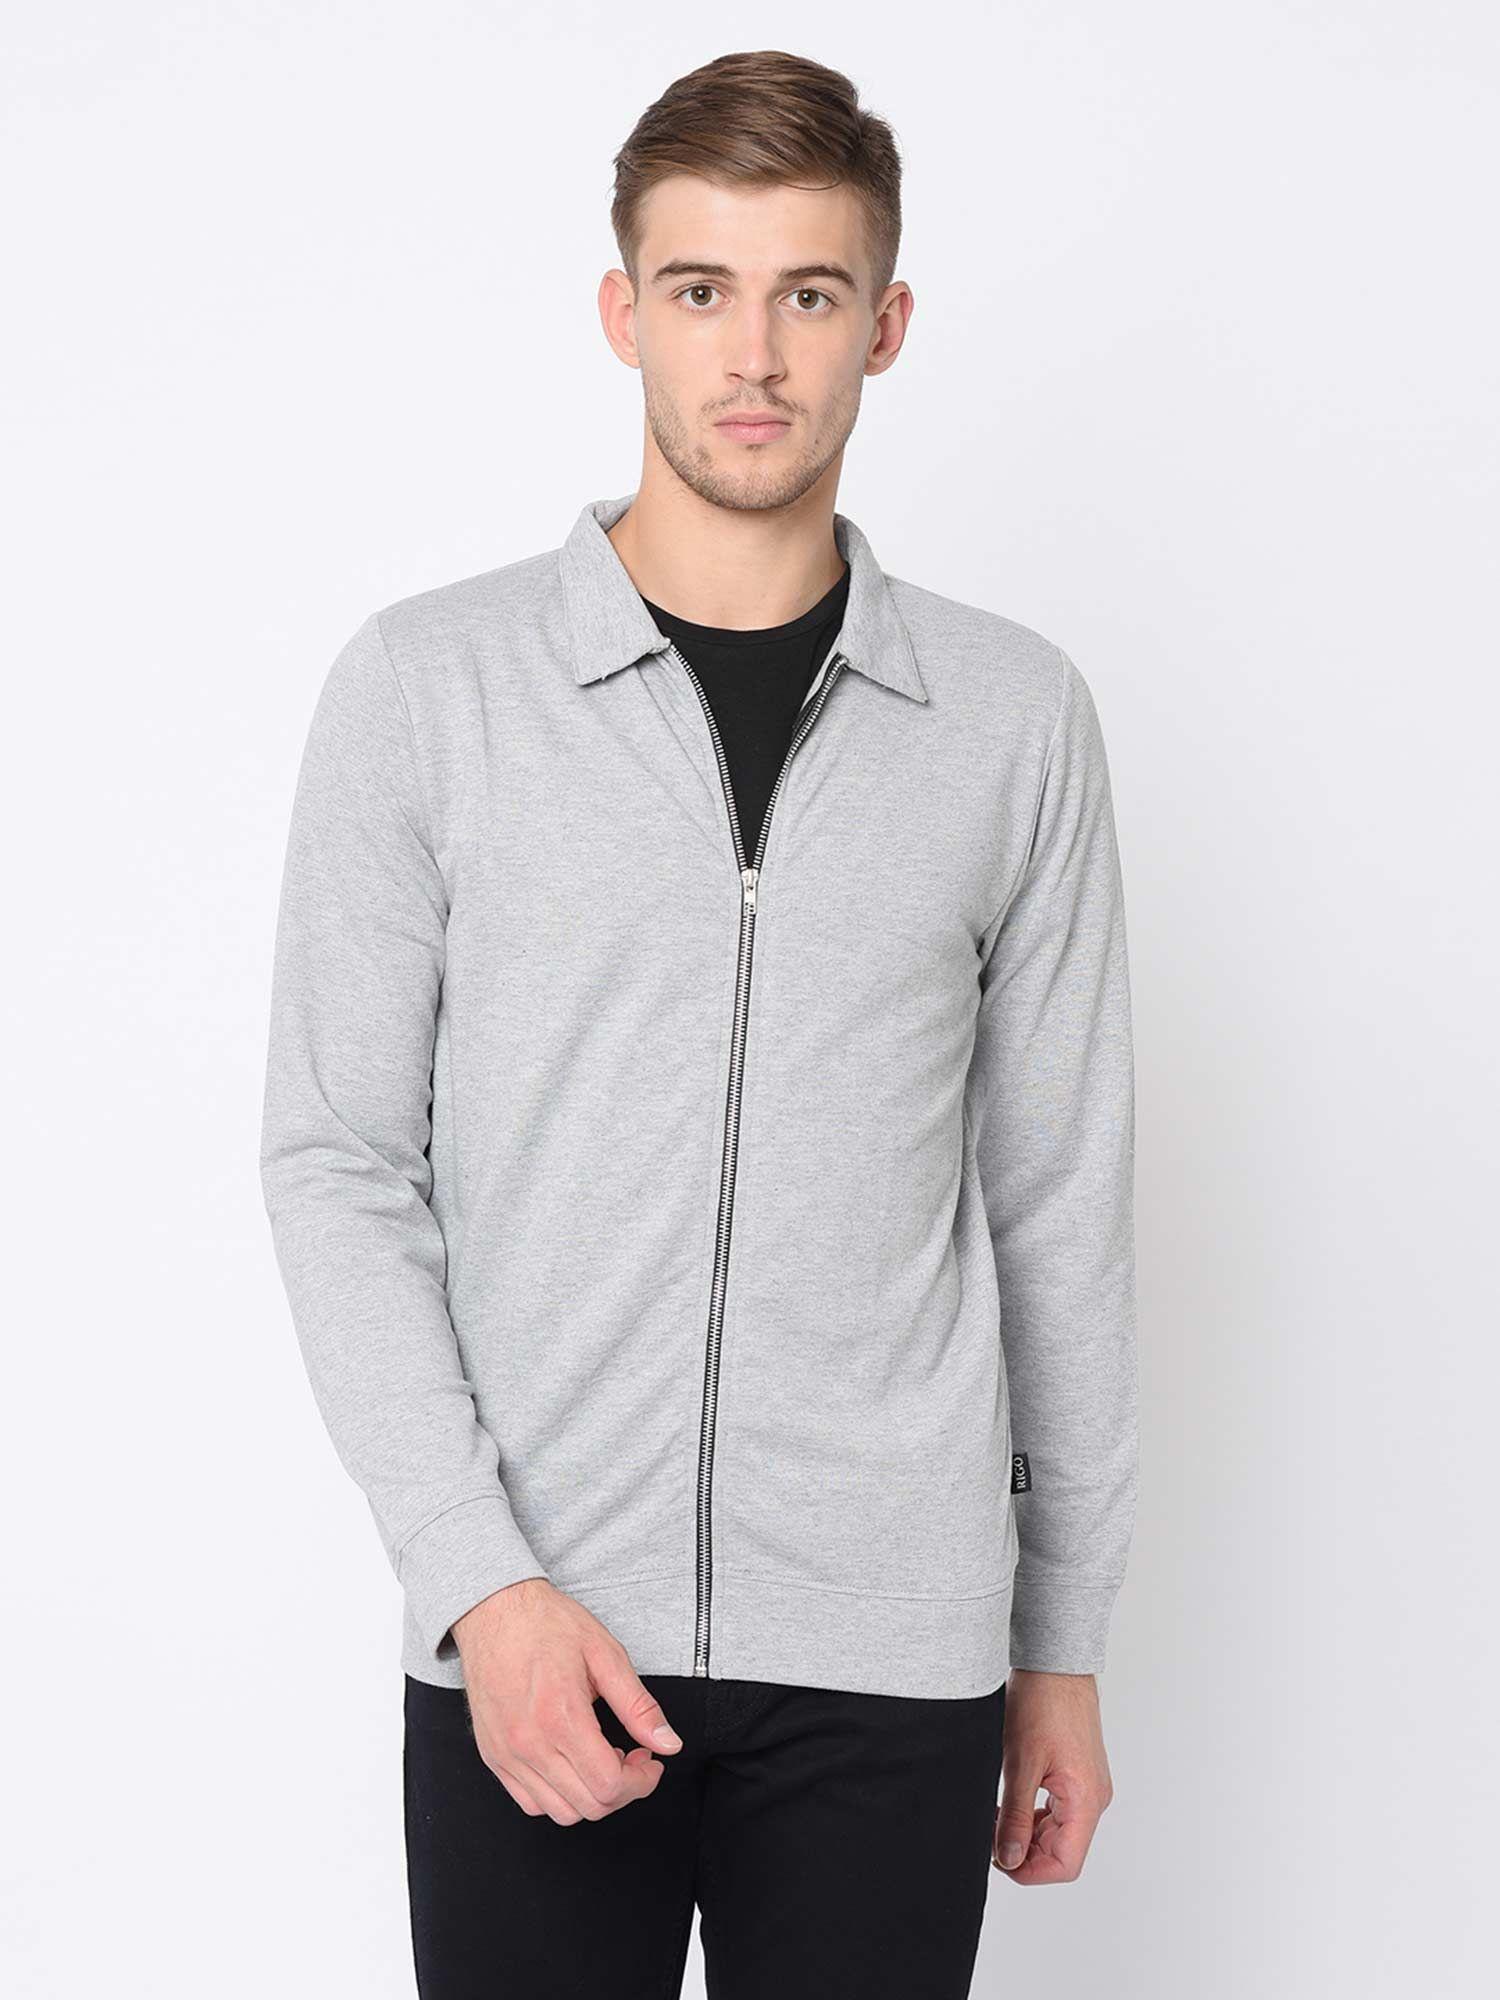 grey-terry-harrington-full-sleeve-jacket-for-men